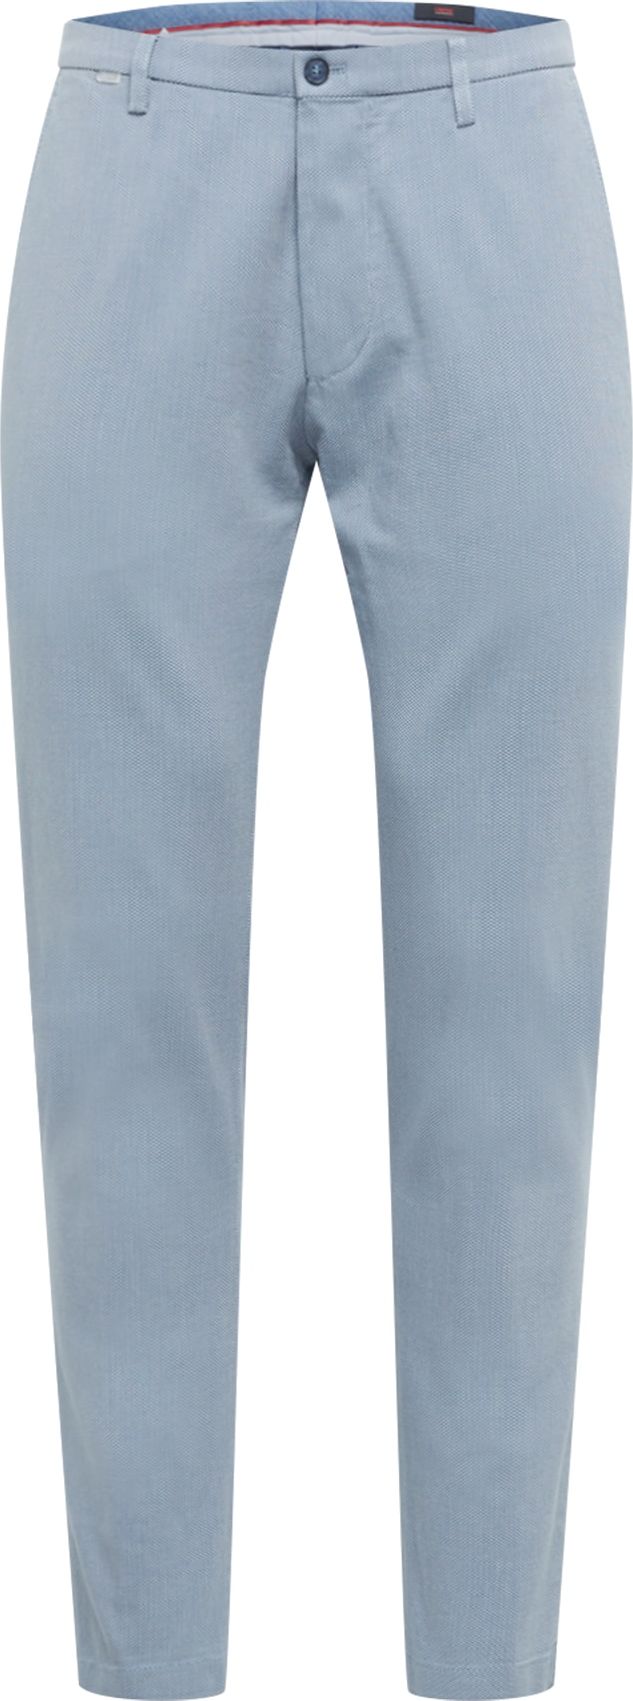 CINQUE Chino kalhoty 'Cibrody' modrá